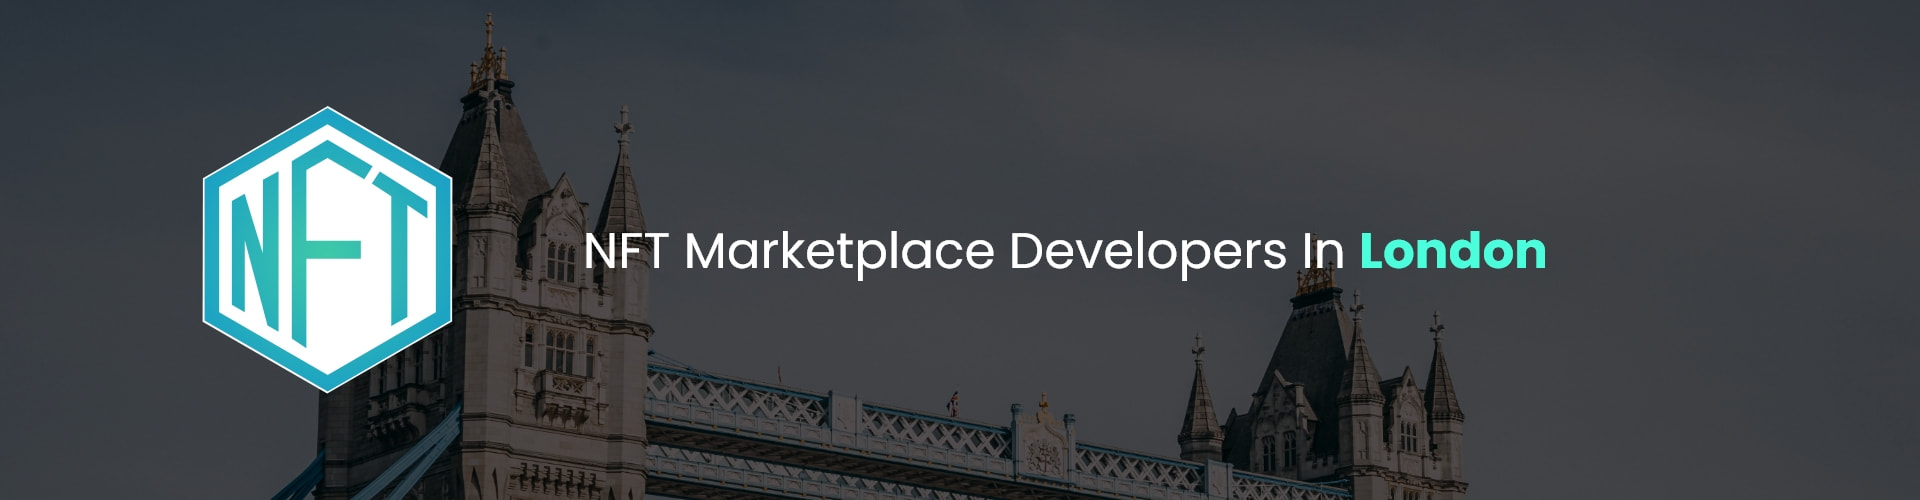 hire nft marketplace developers in london